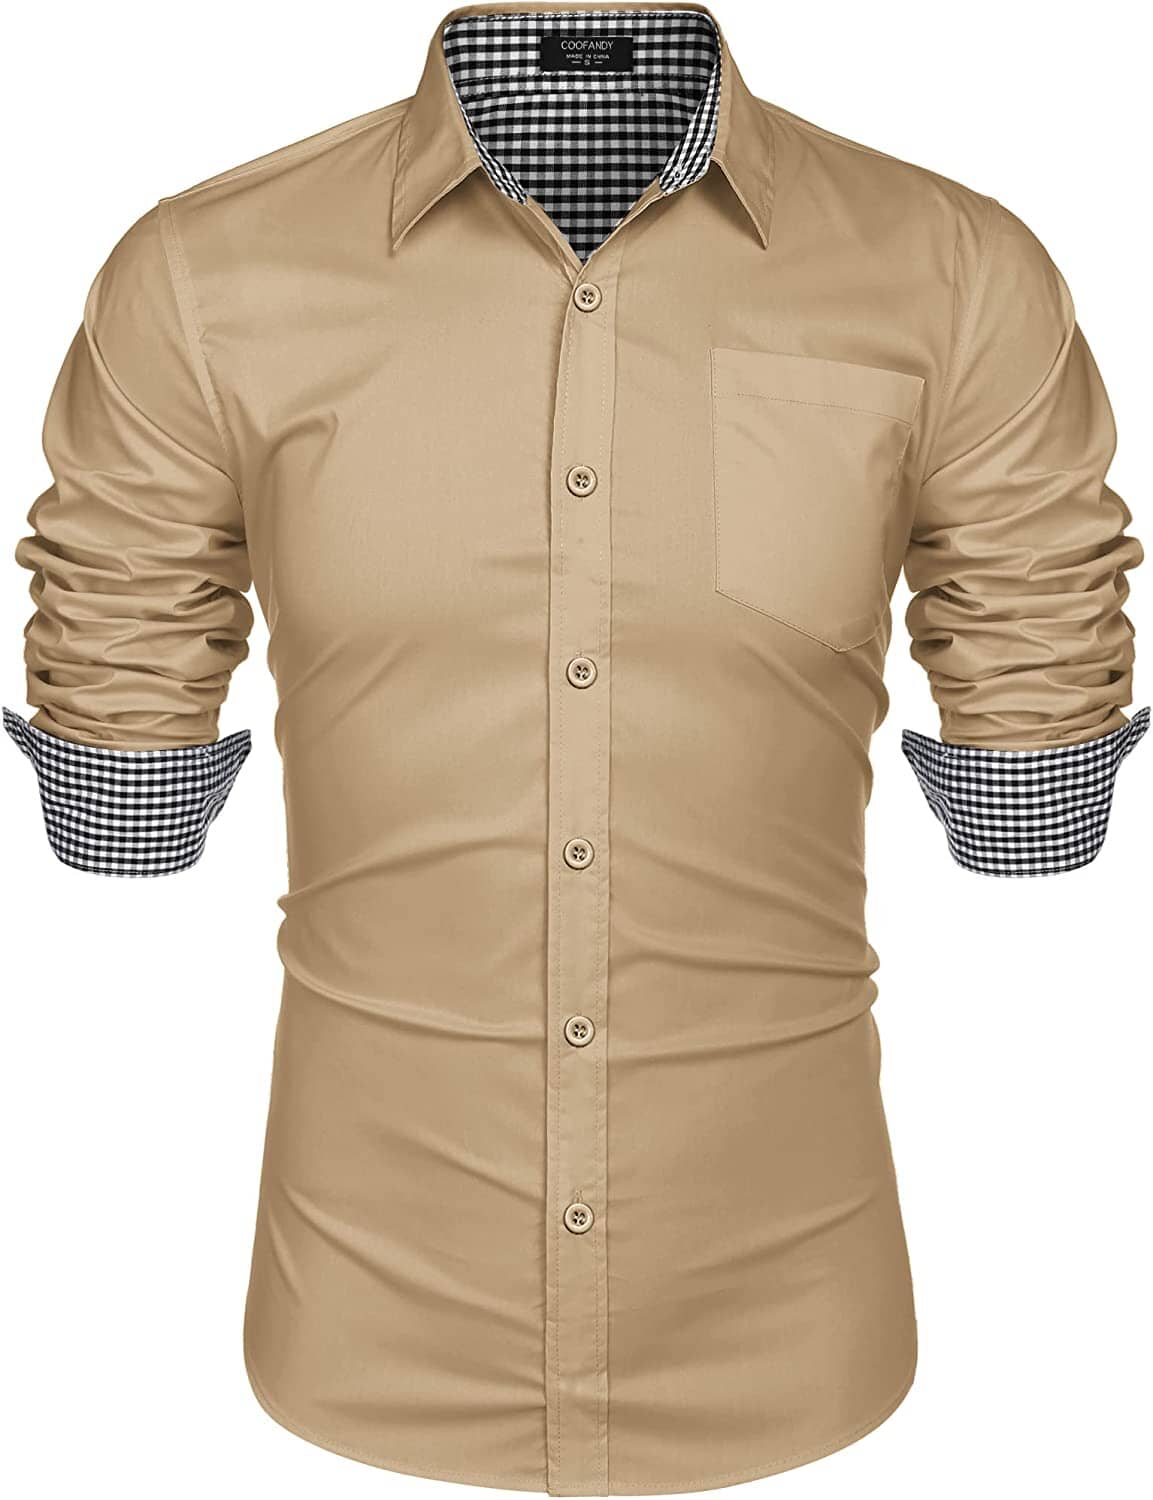 Fashion Business Cotton Dress Shirt (US Only) Shirts COOFANDY Store Khaki S 